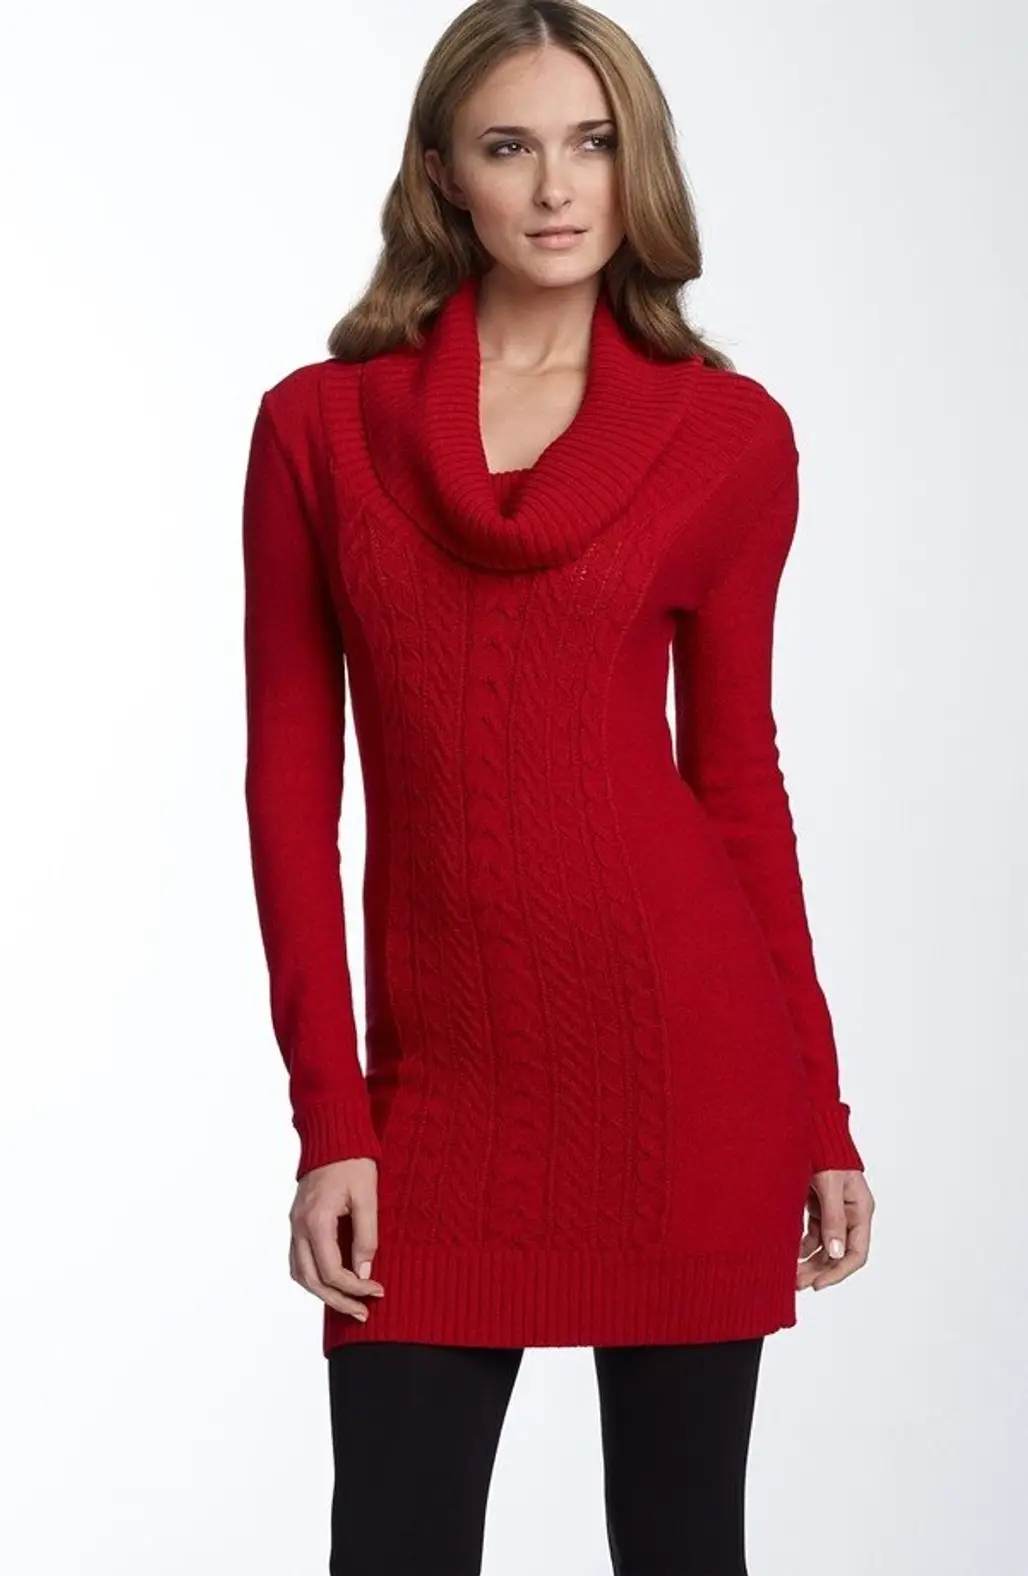 Black Leggings + Red Sweater Dress